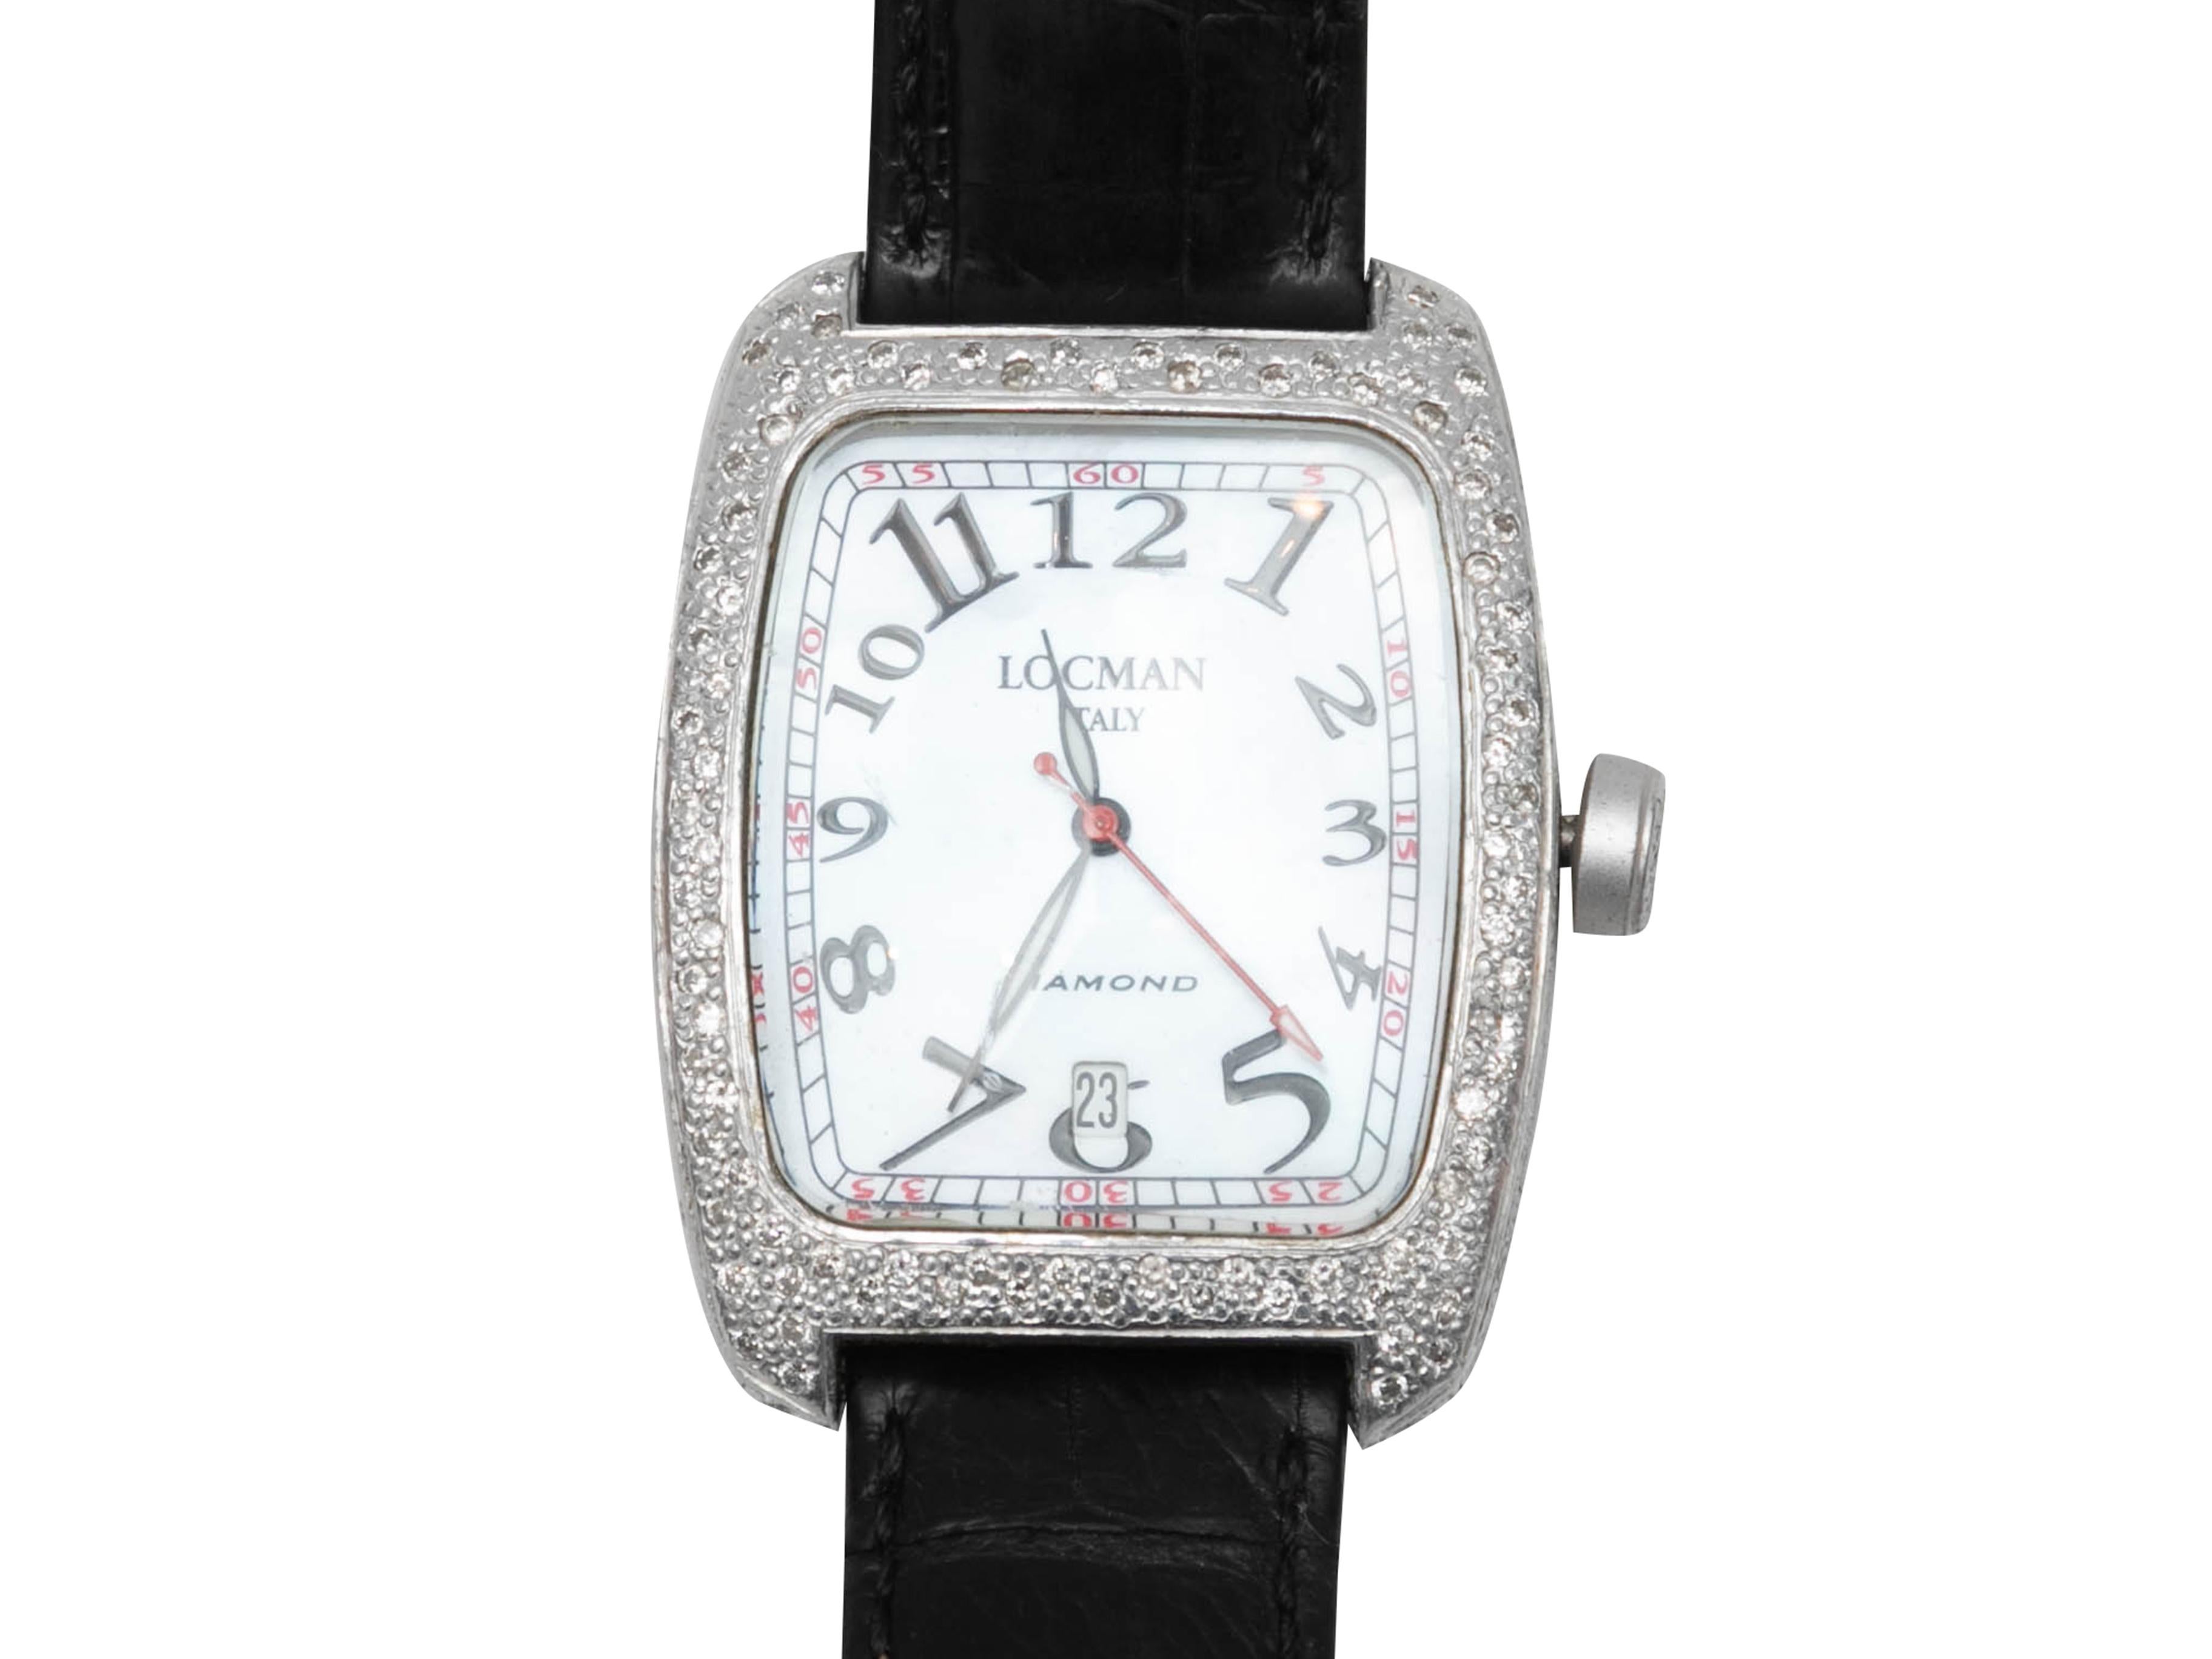 Black alligator and diamond aluminum watch by Locman. Pave diamond embellishments at watch face. Buckle closure. 0.5